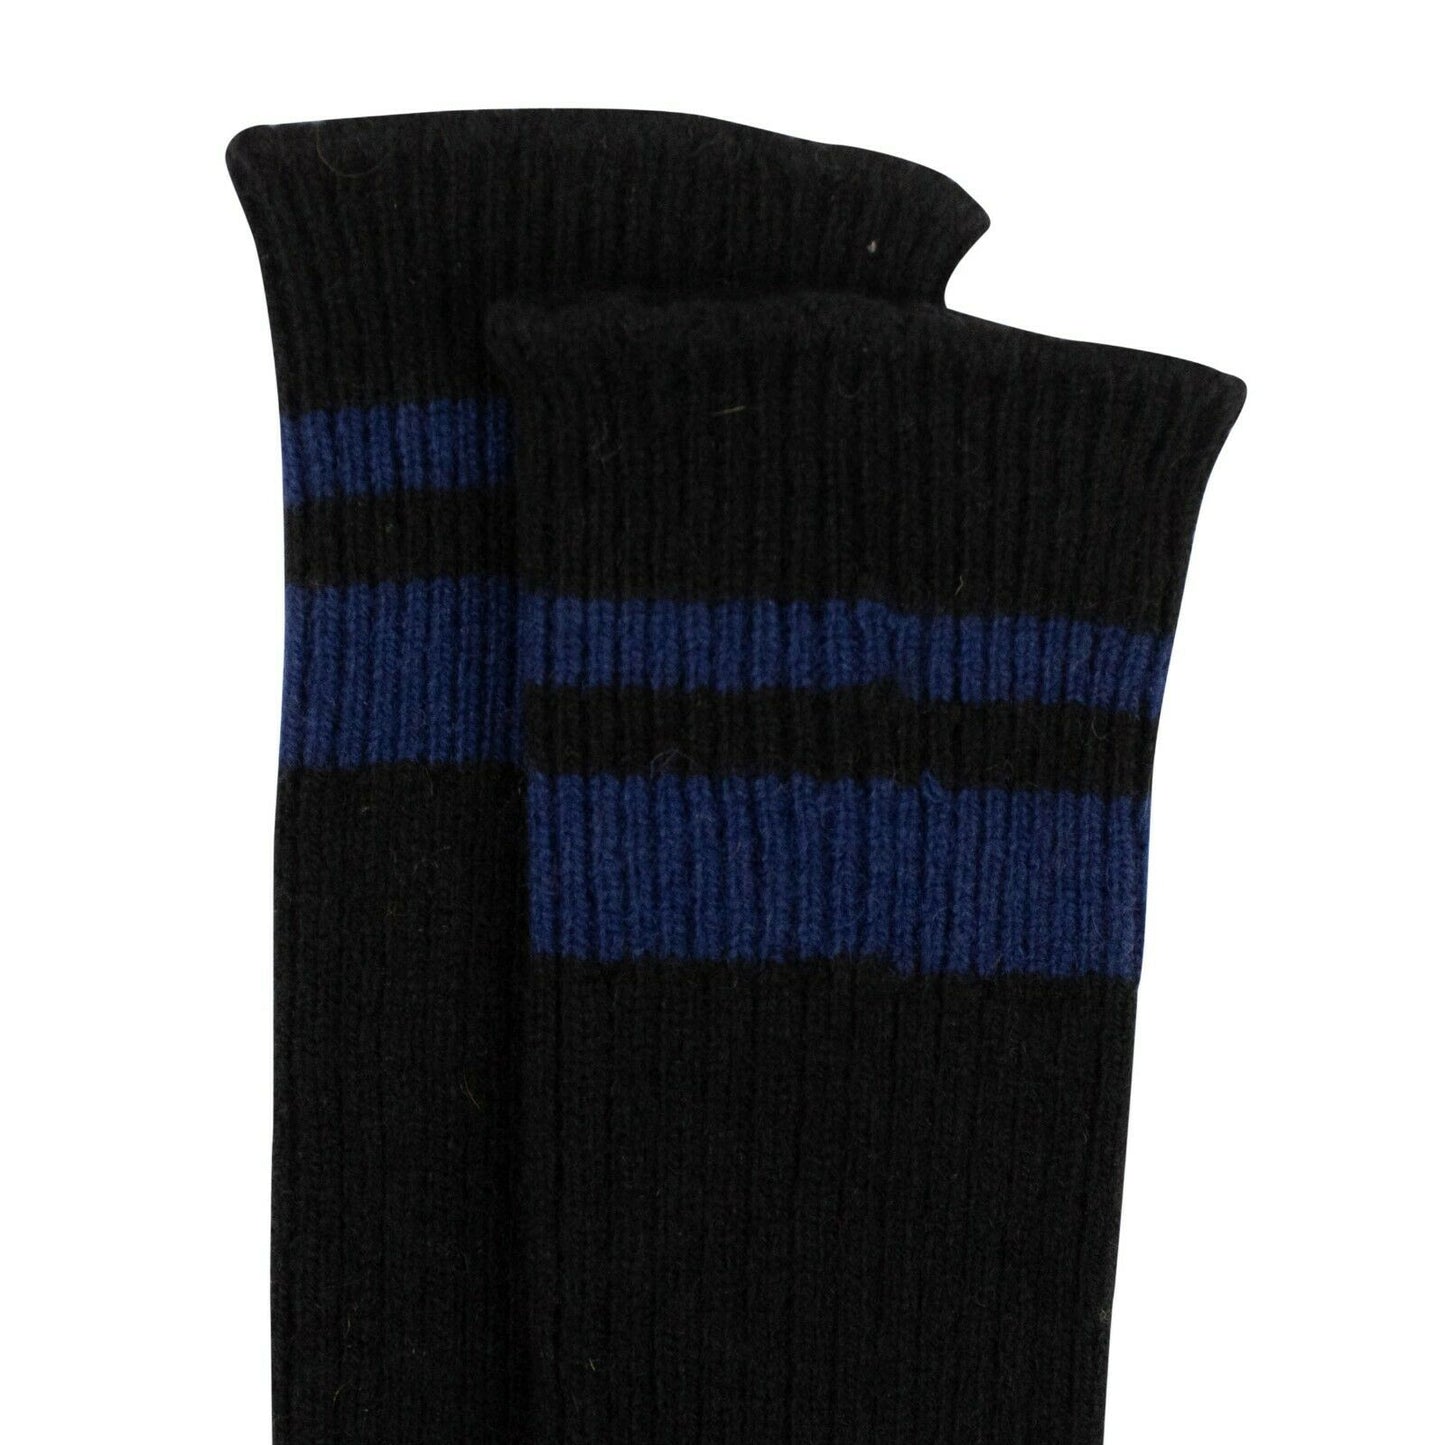 Unravel Project Ribbed Mid Length Socks - Black/Blue